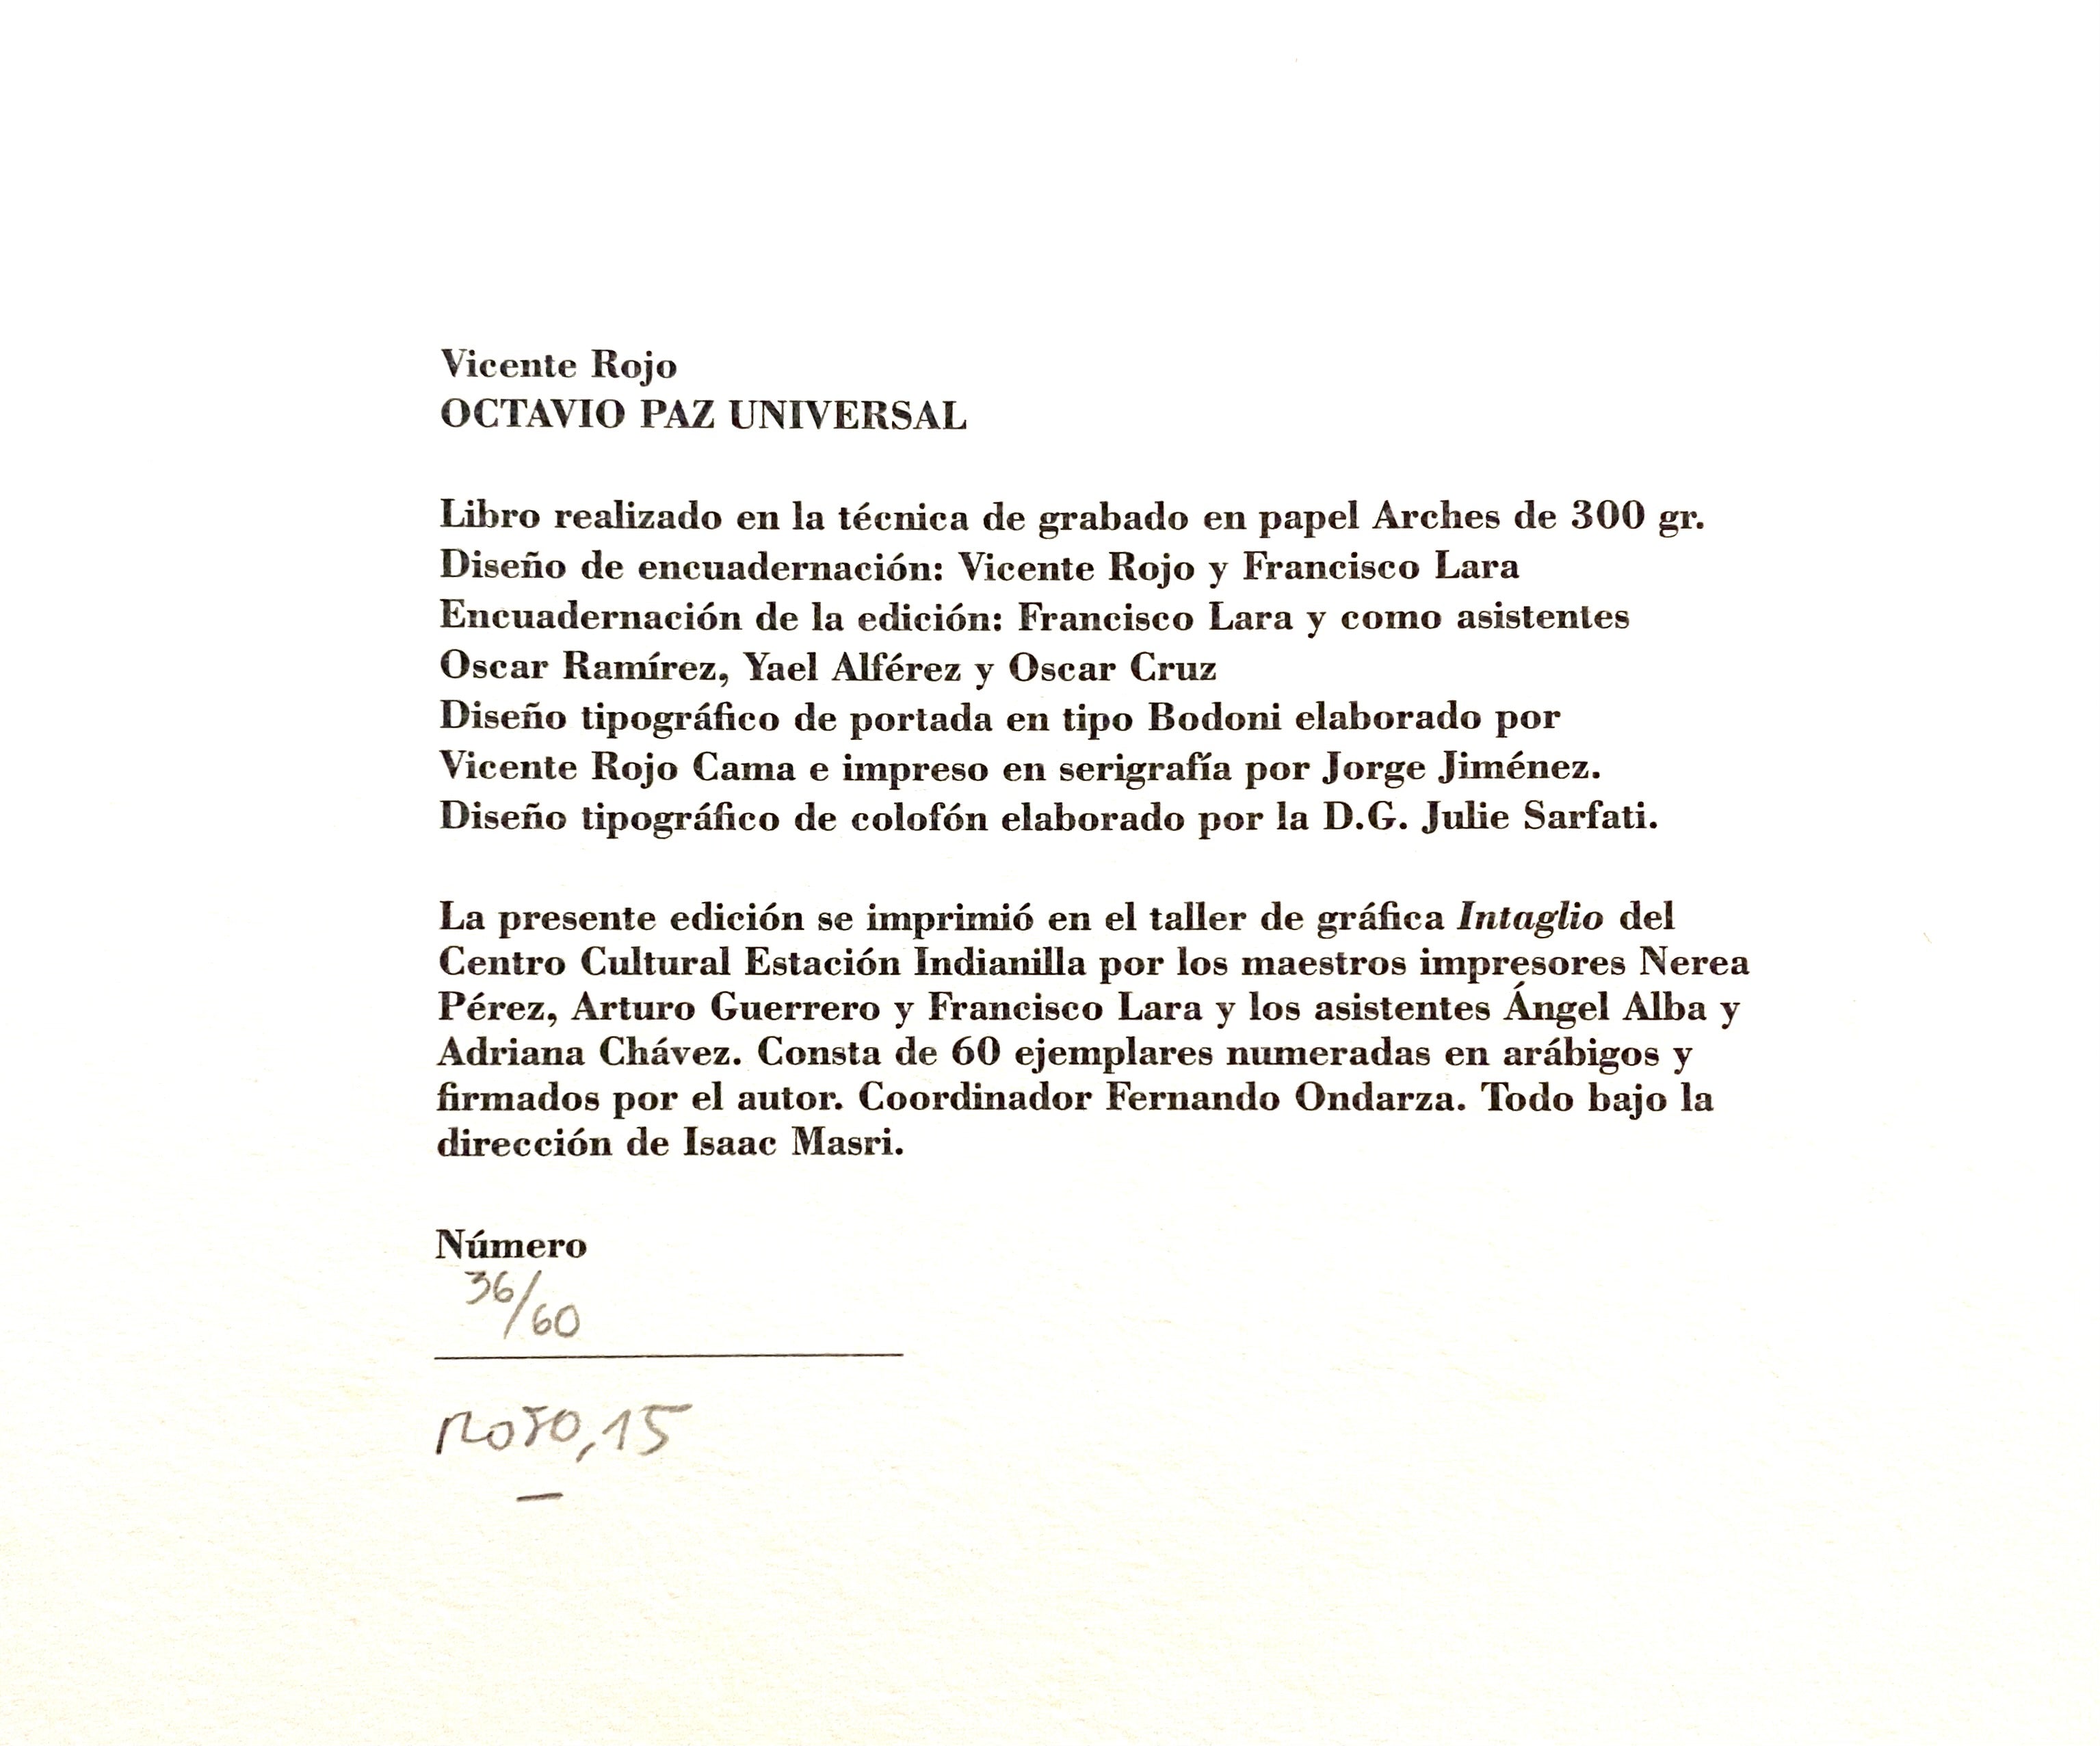 Vicente Rojo “OCTAVIO PAZ UNIVERSAL”